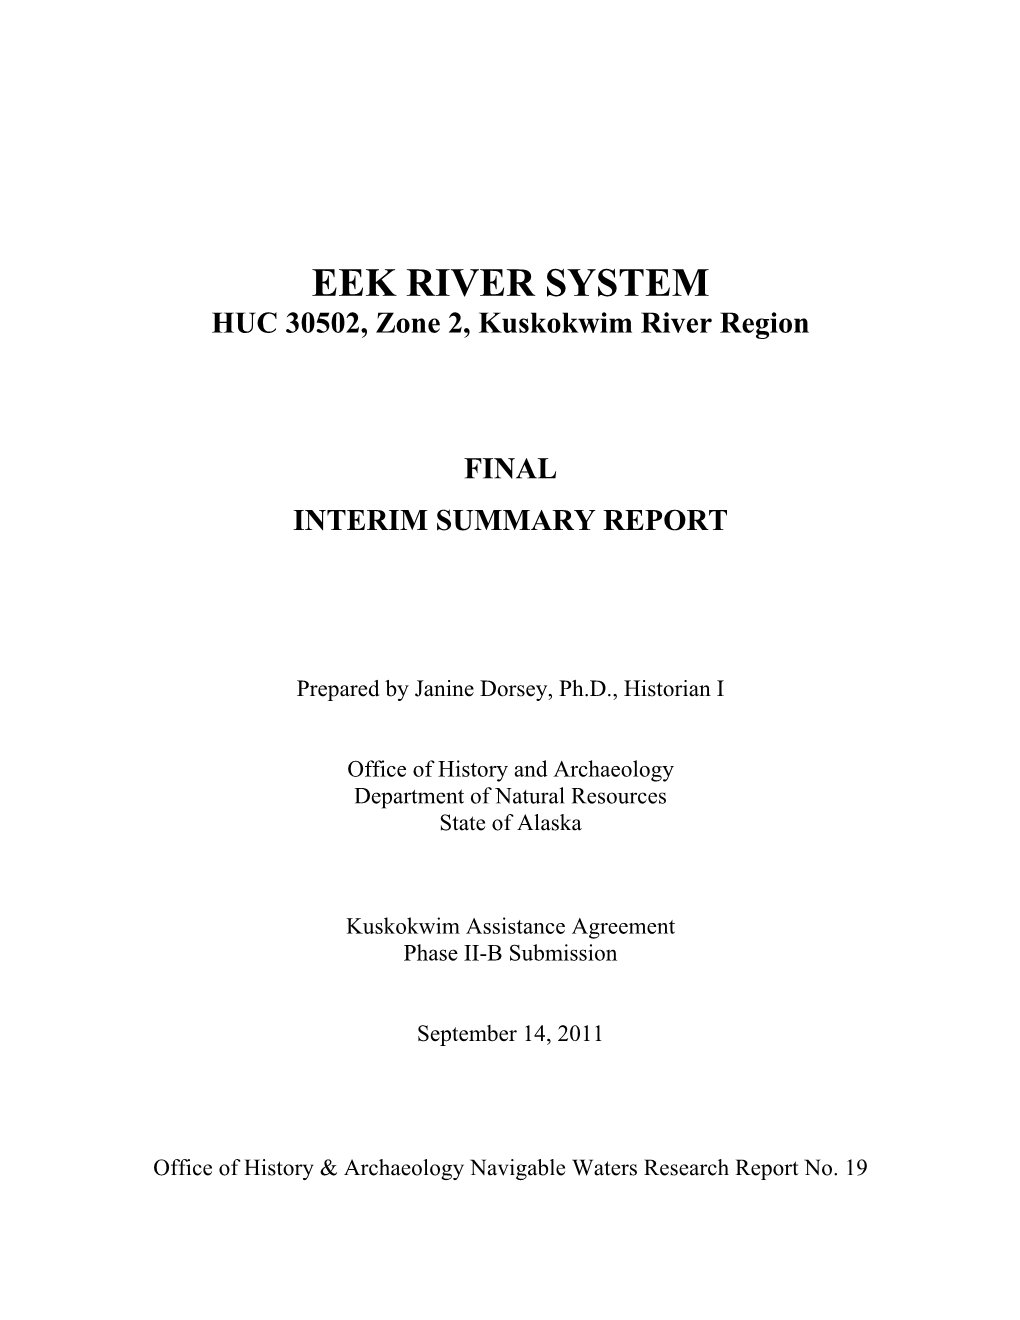 EEK RIVER SYSTEM HUC 30502, Zone 2, Kuskokwim River Region